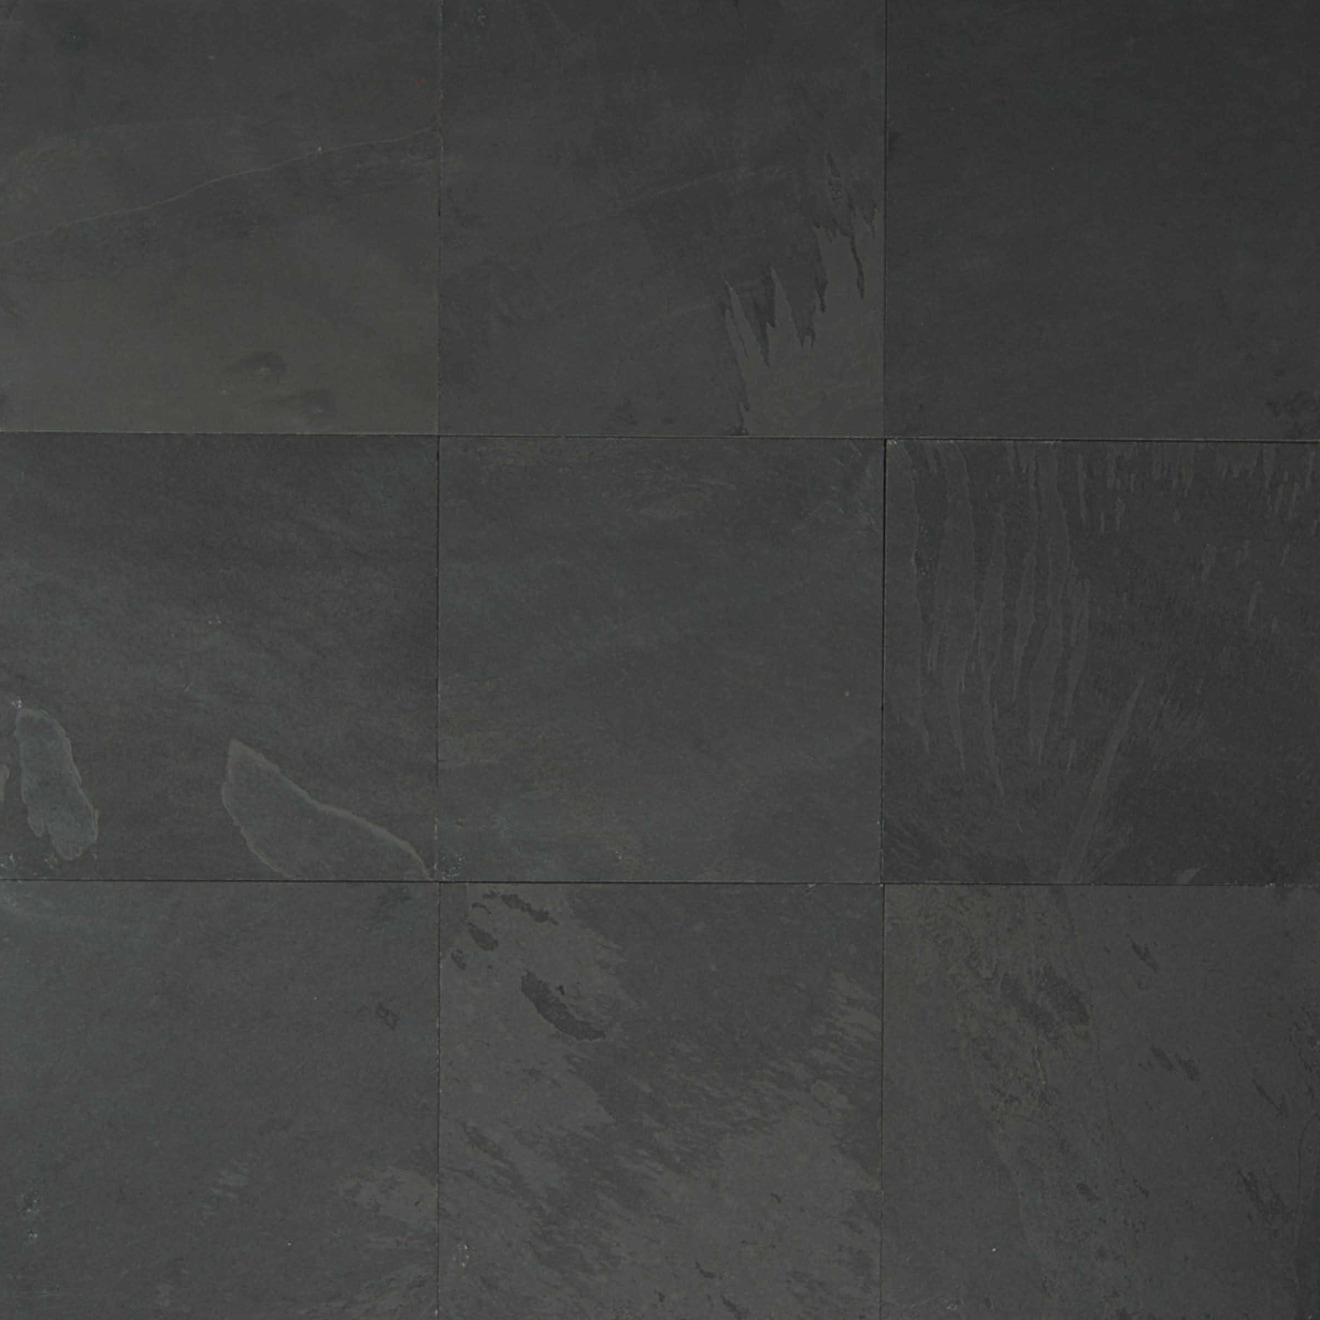 Black Pearl 12 x 12 Gauged Slate Tile